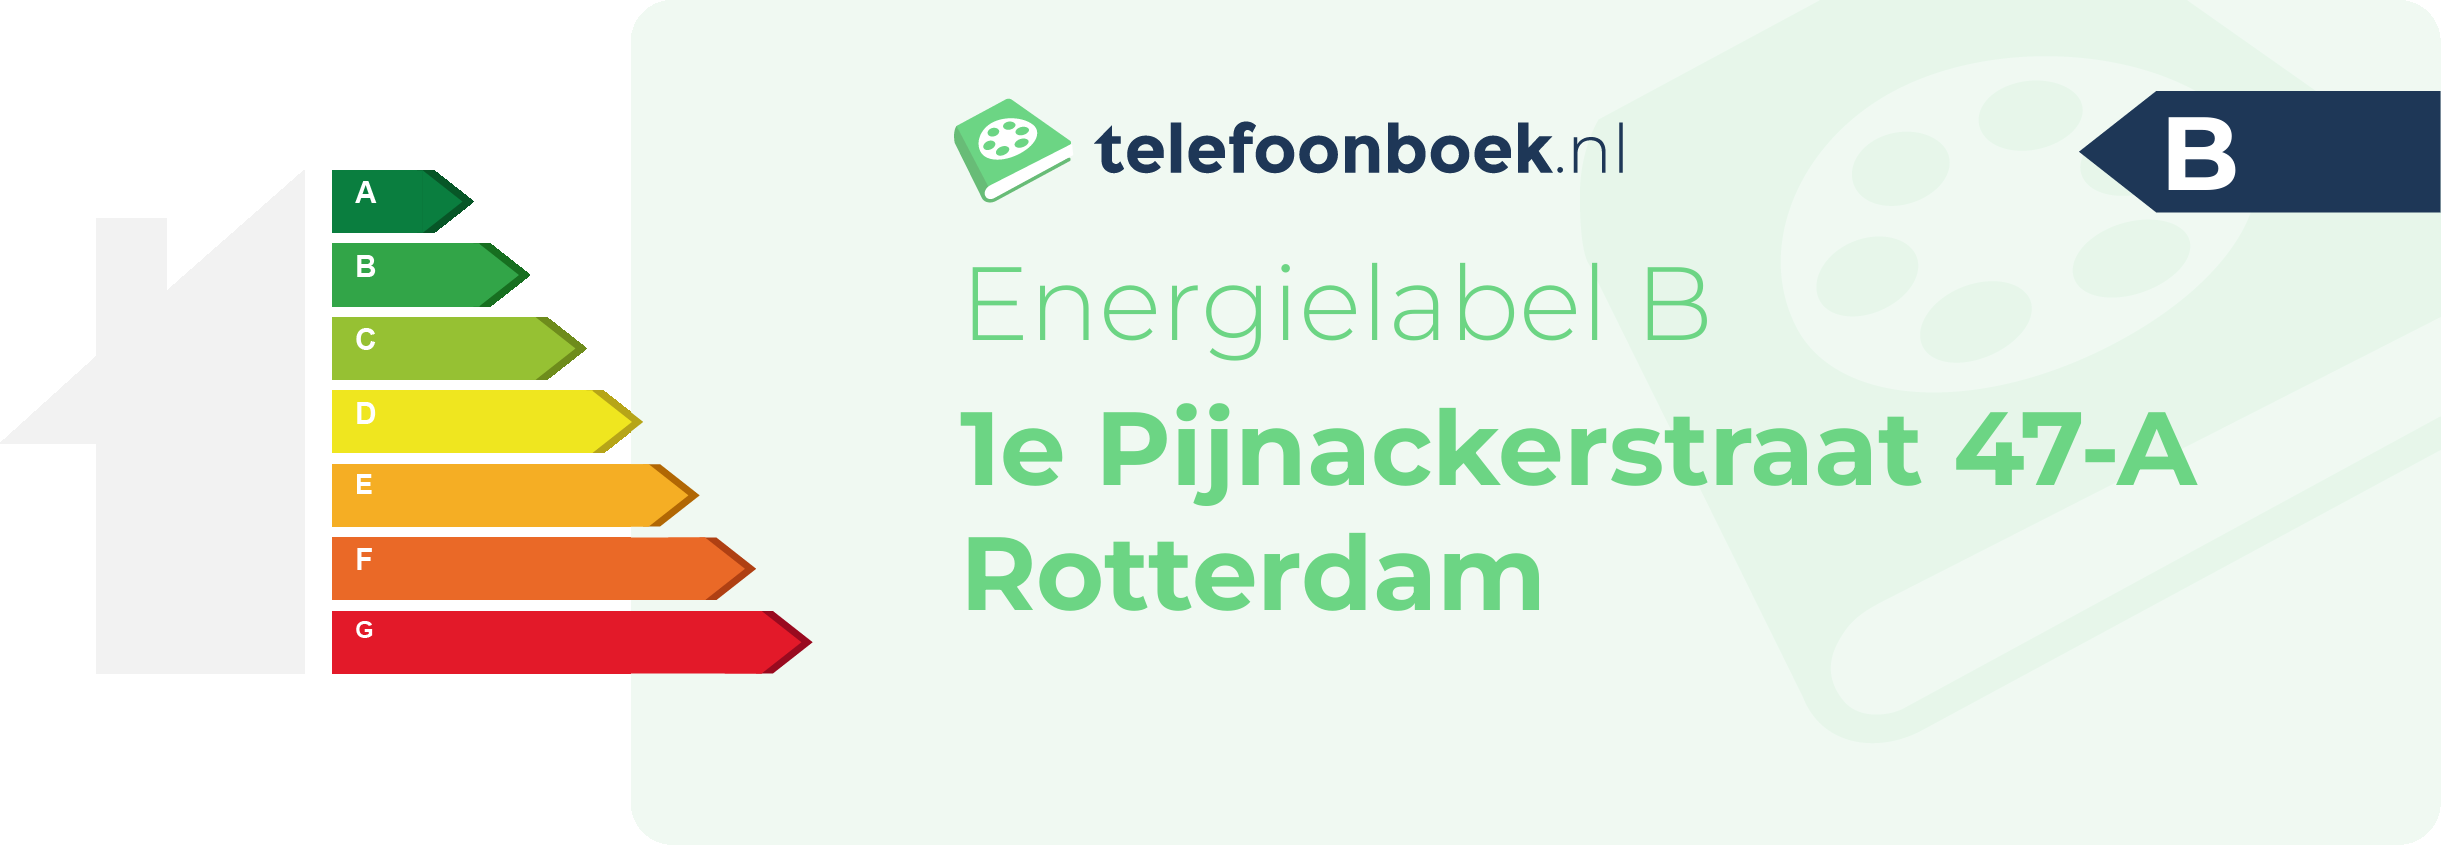 Energielabel 1e Pijnackerstraat 47-A Rotterdam